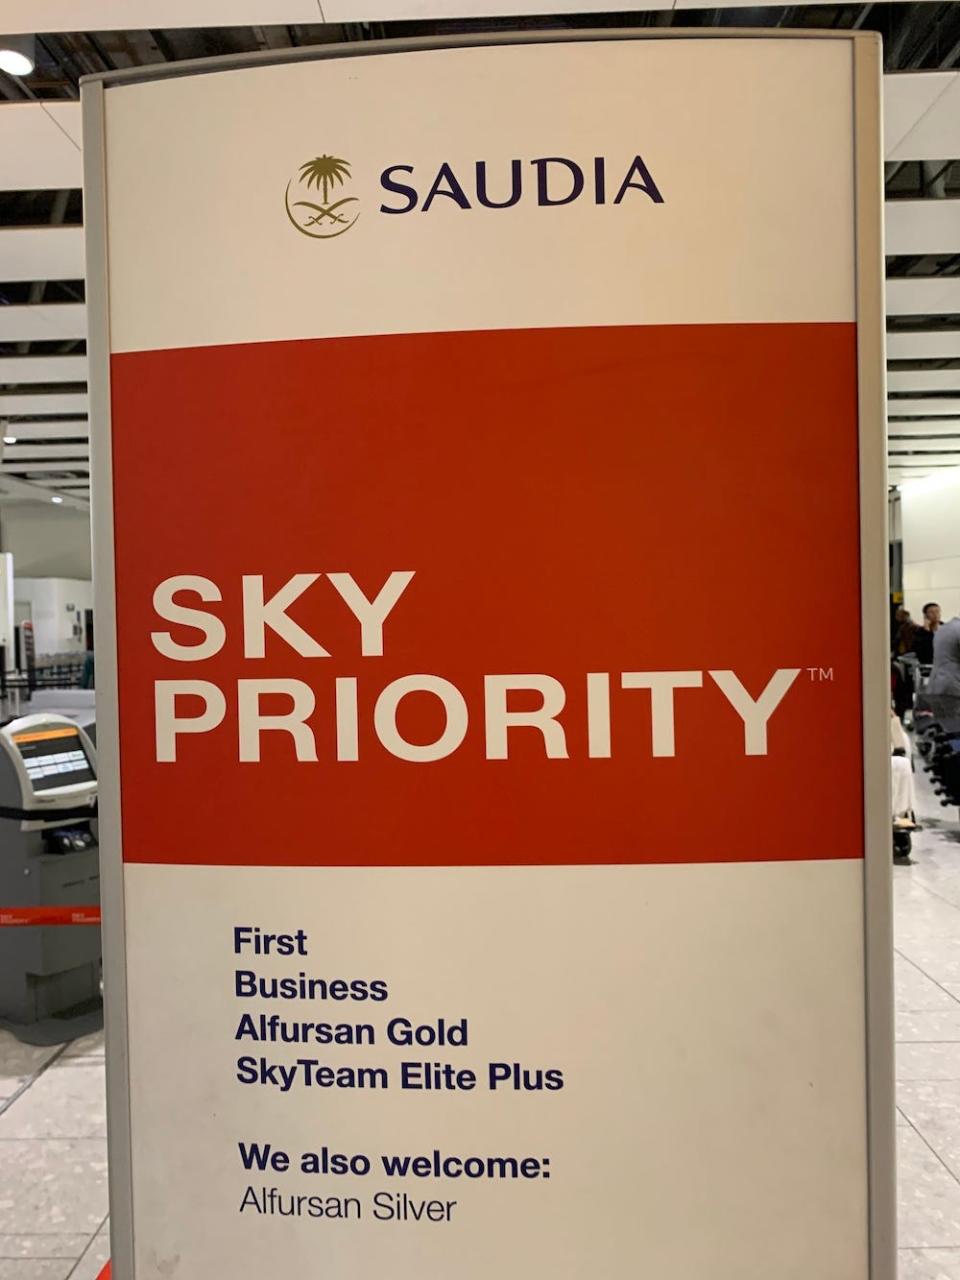 Bill Saudia Saudi Arabian airlines